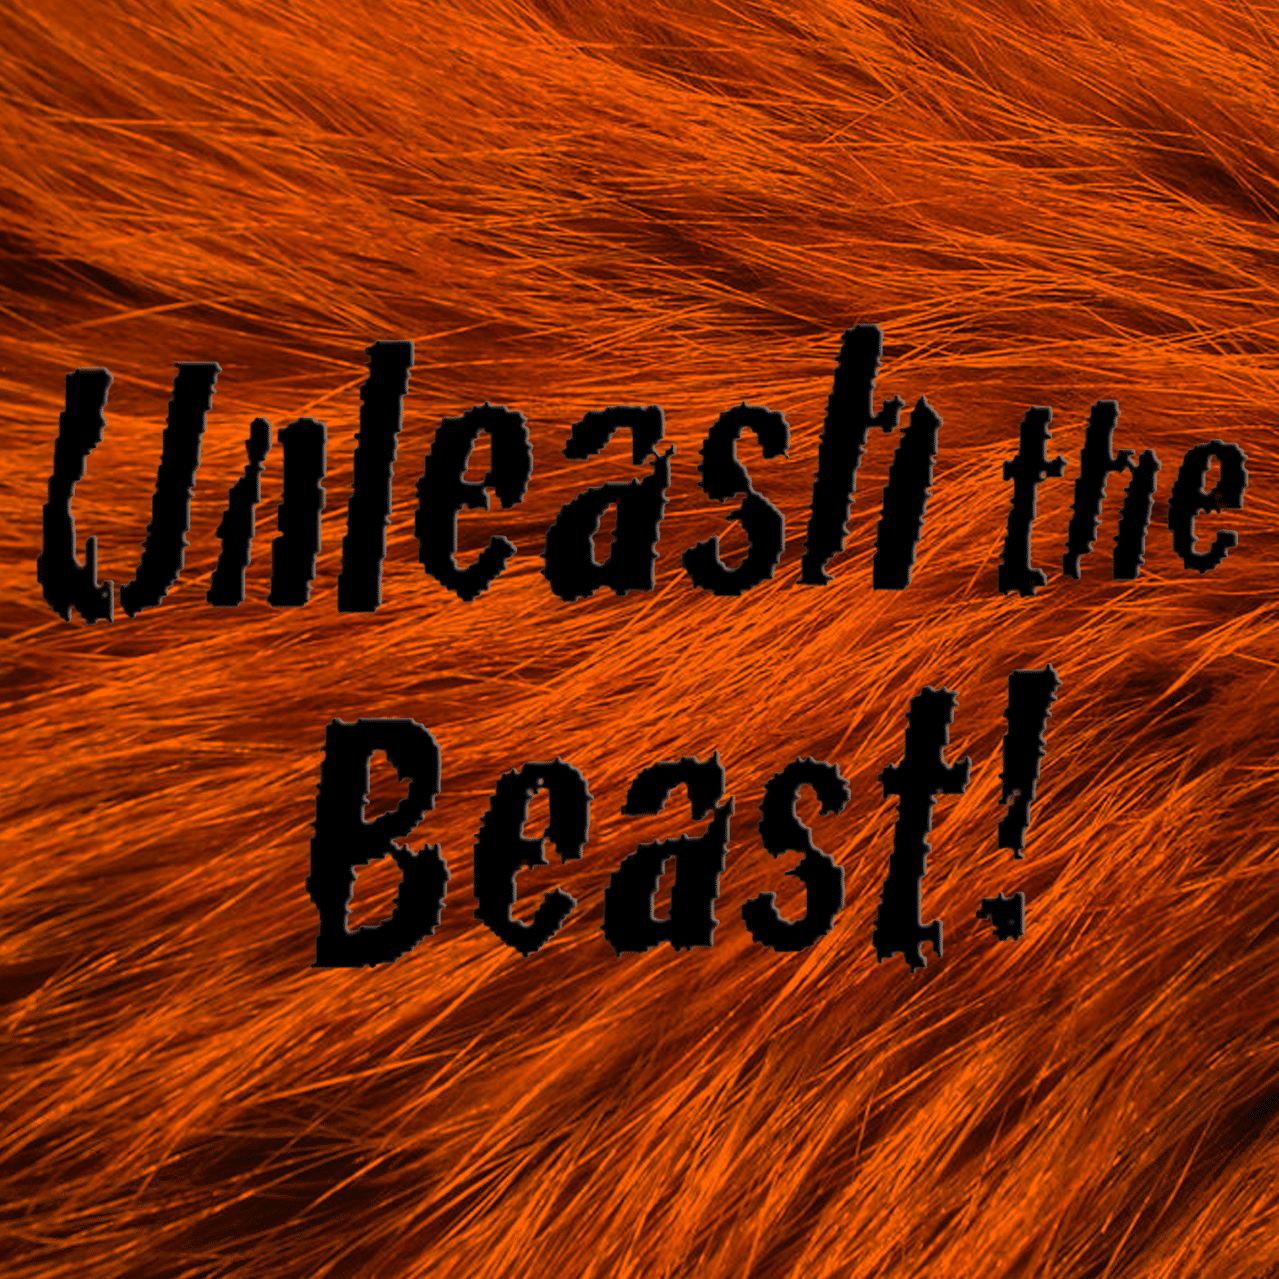 Unleash the Beast written on top of orange fur background